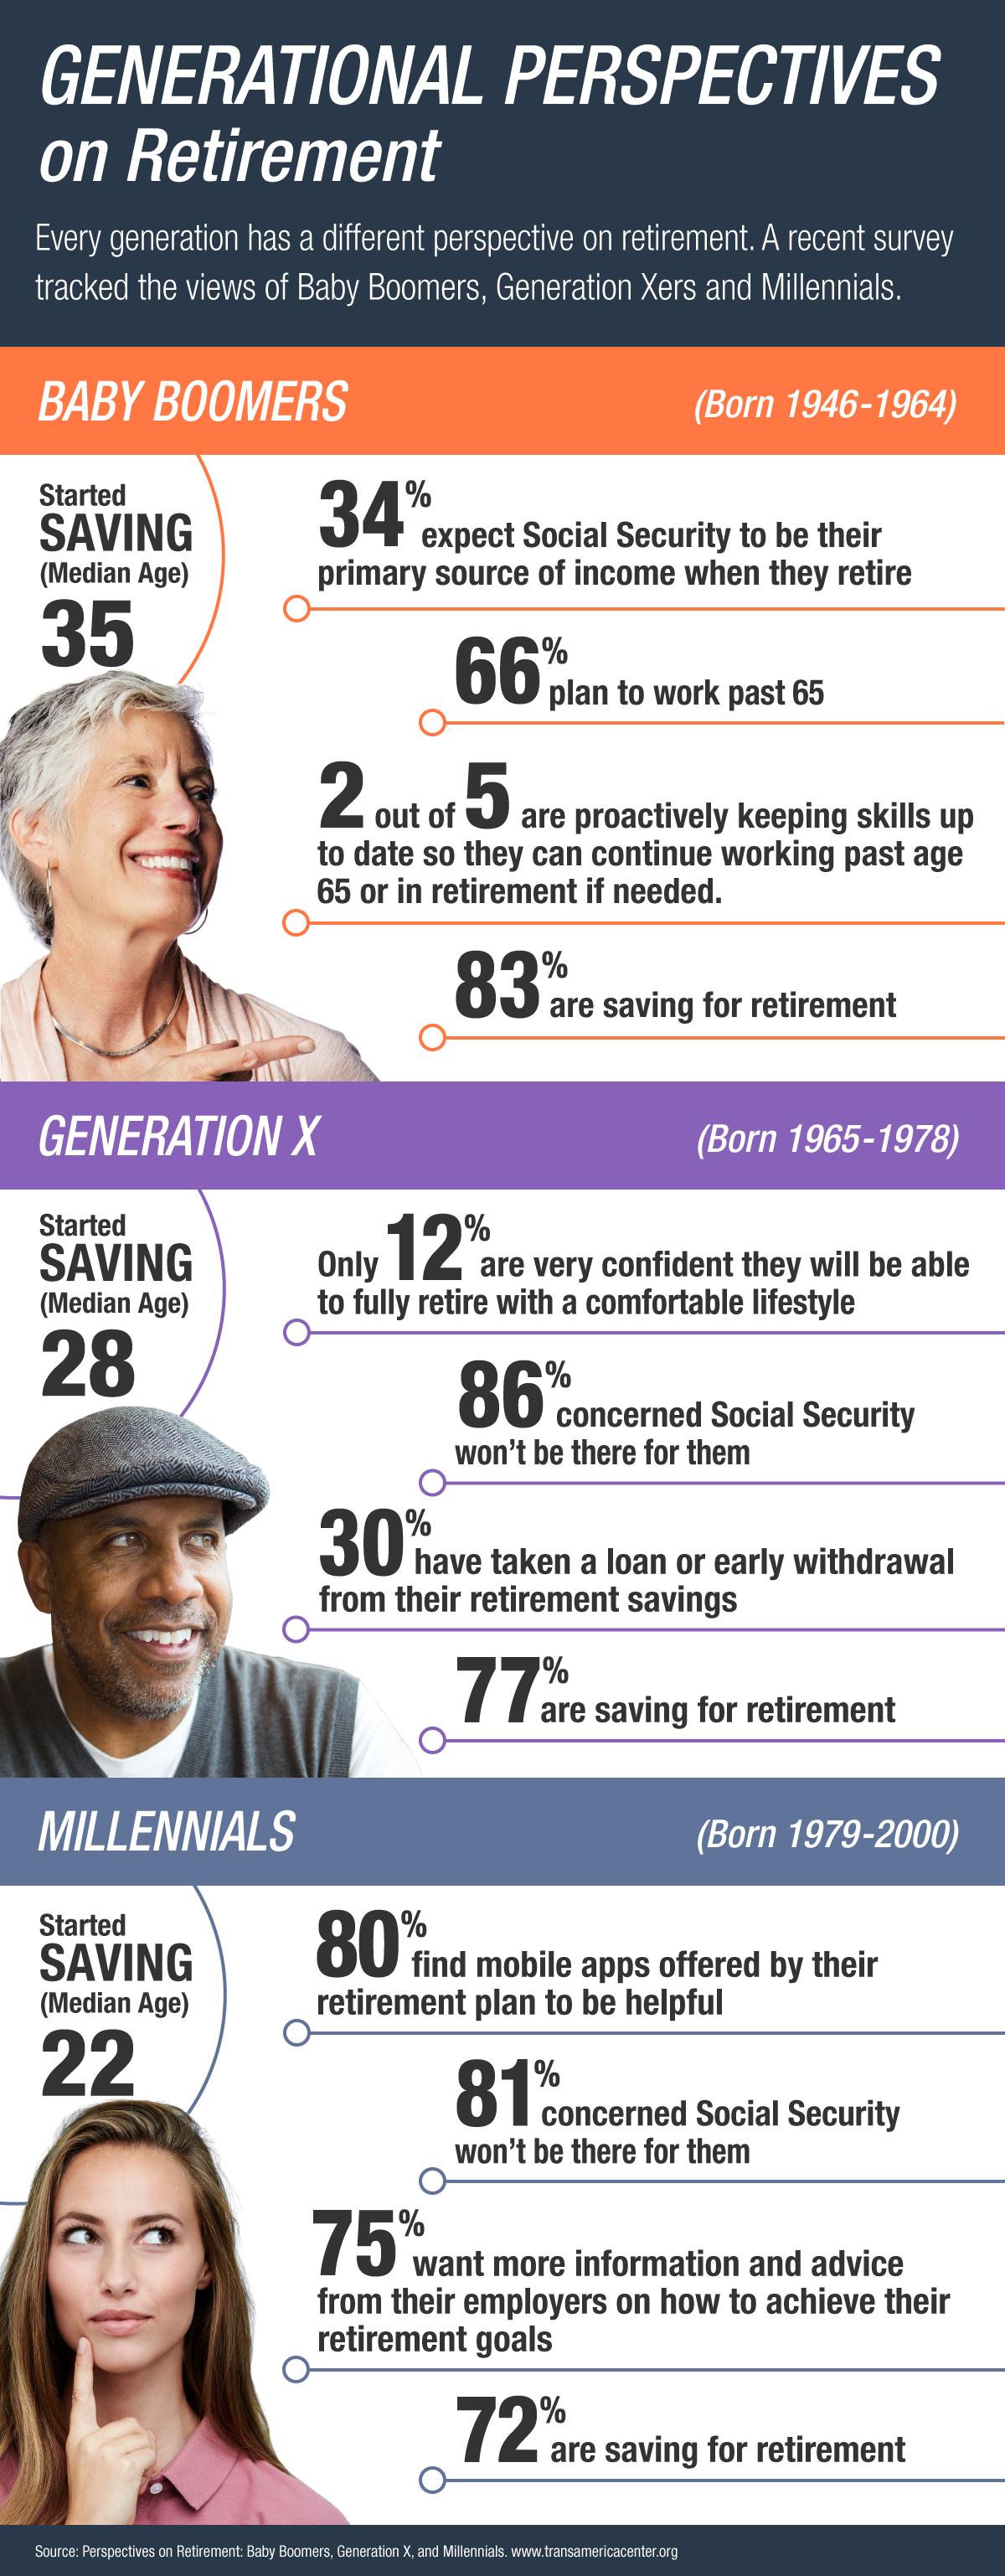 Generational Attitudes on Retirement